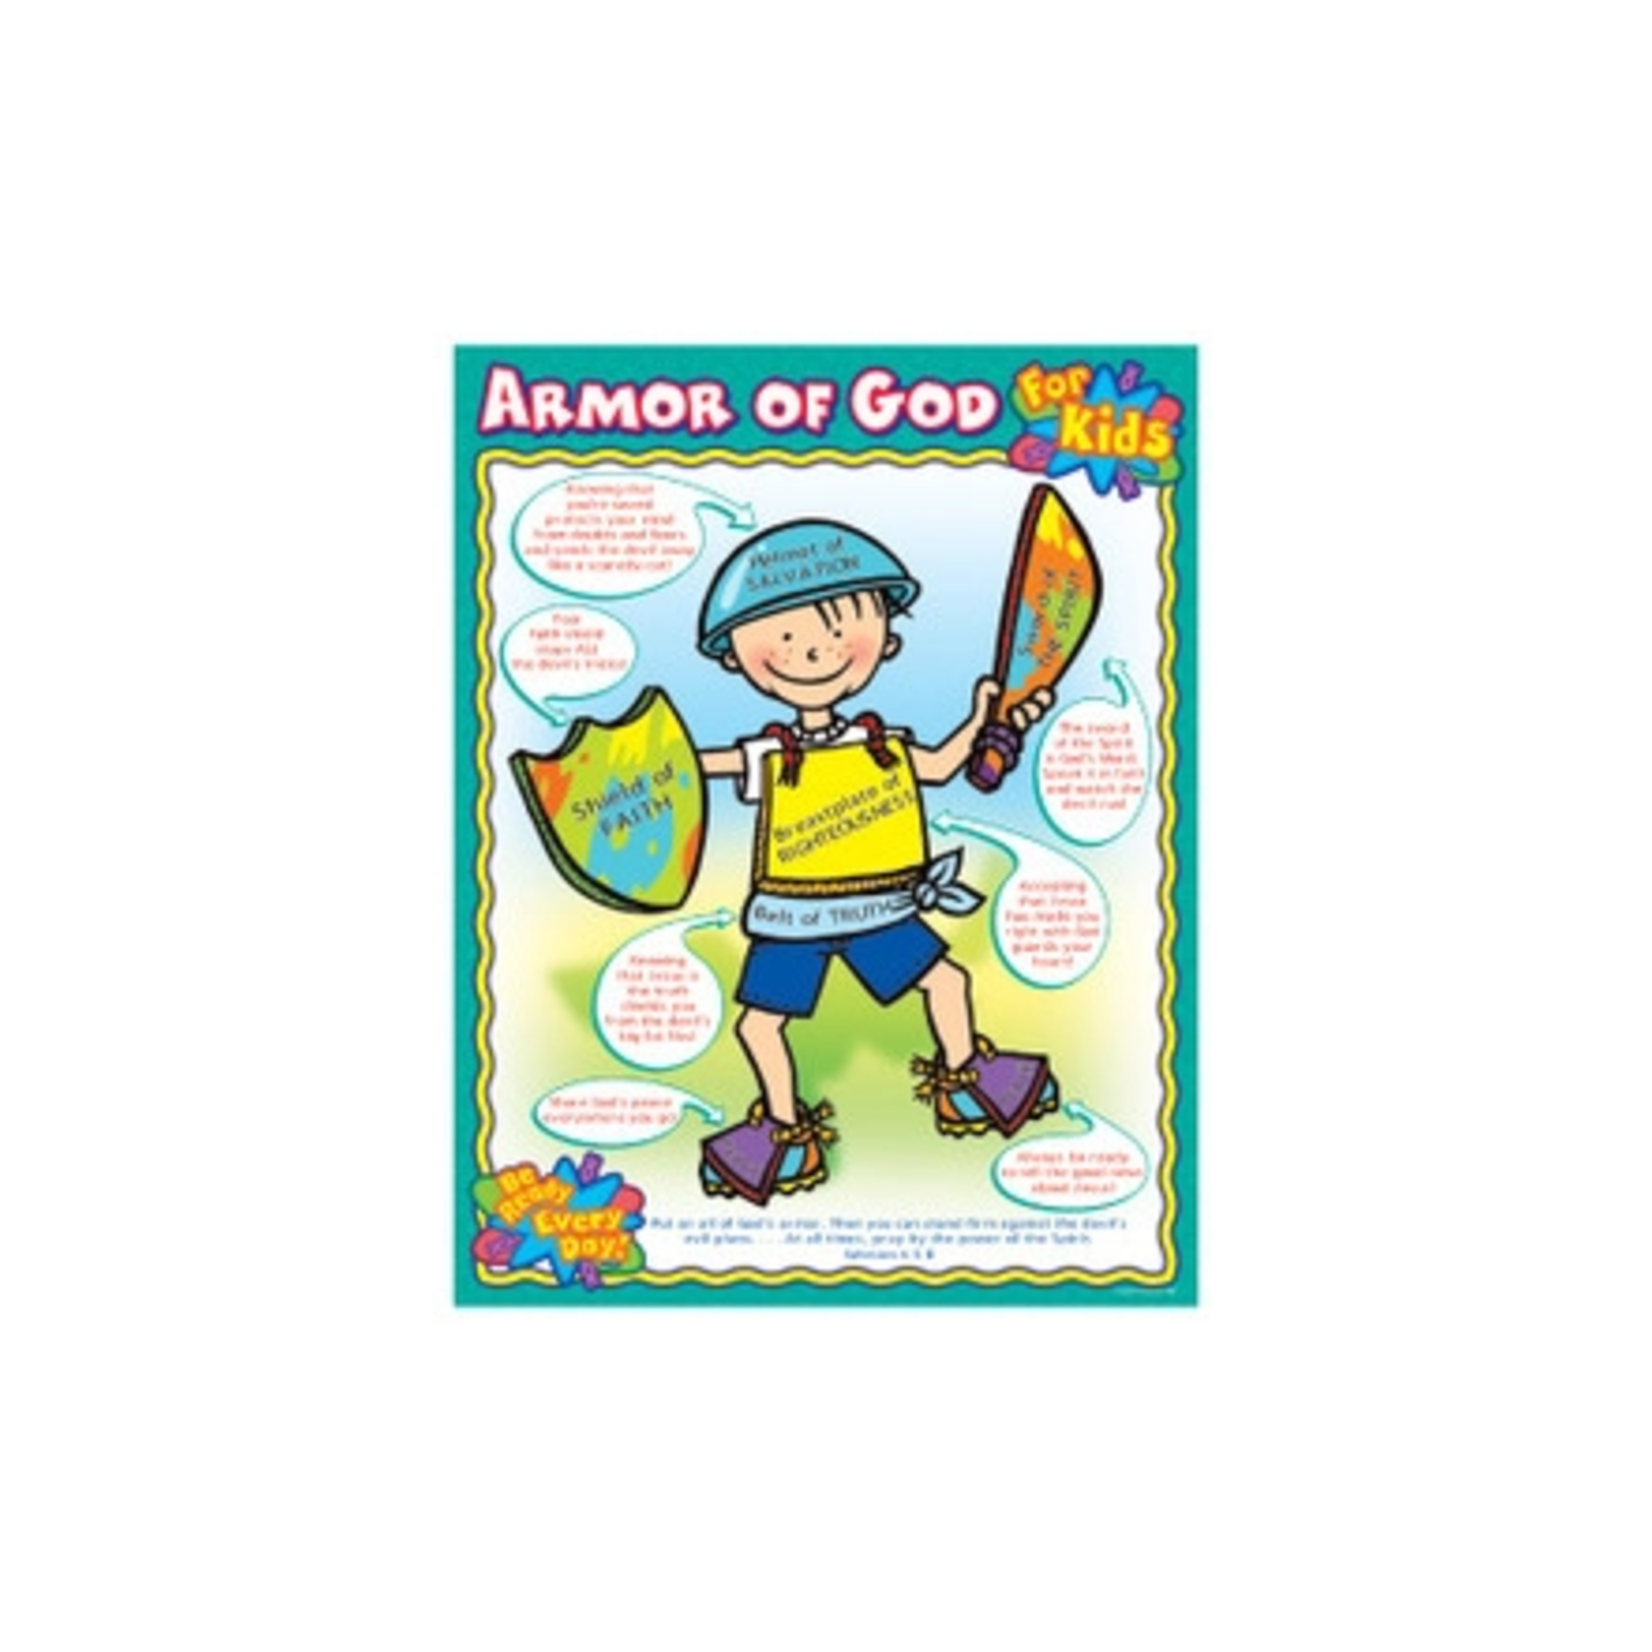 CARSON DELLOSA PUBLISHING CO Armor of God for Kids Chart